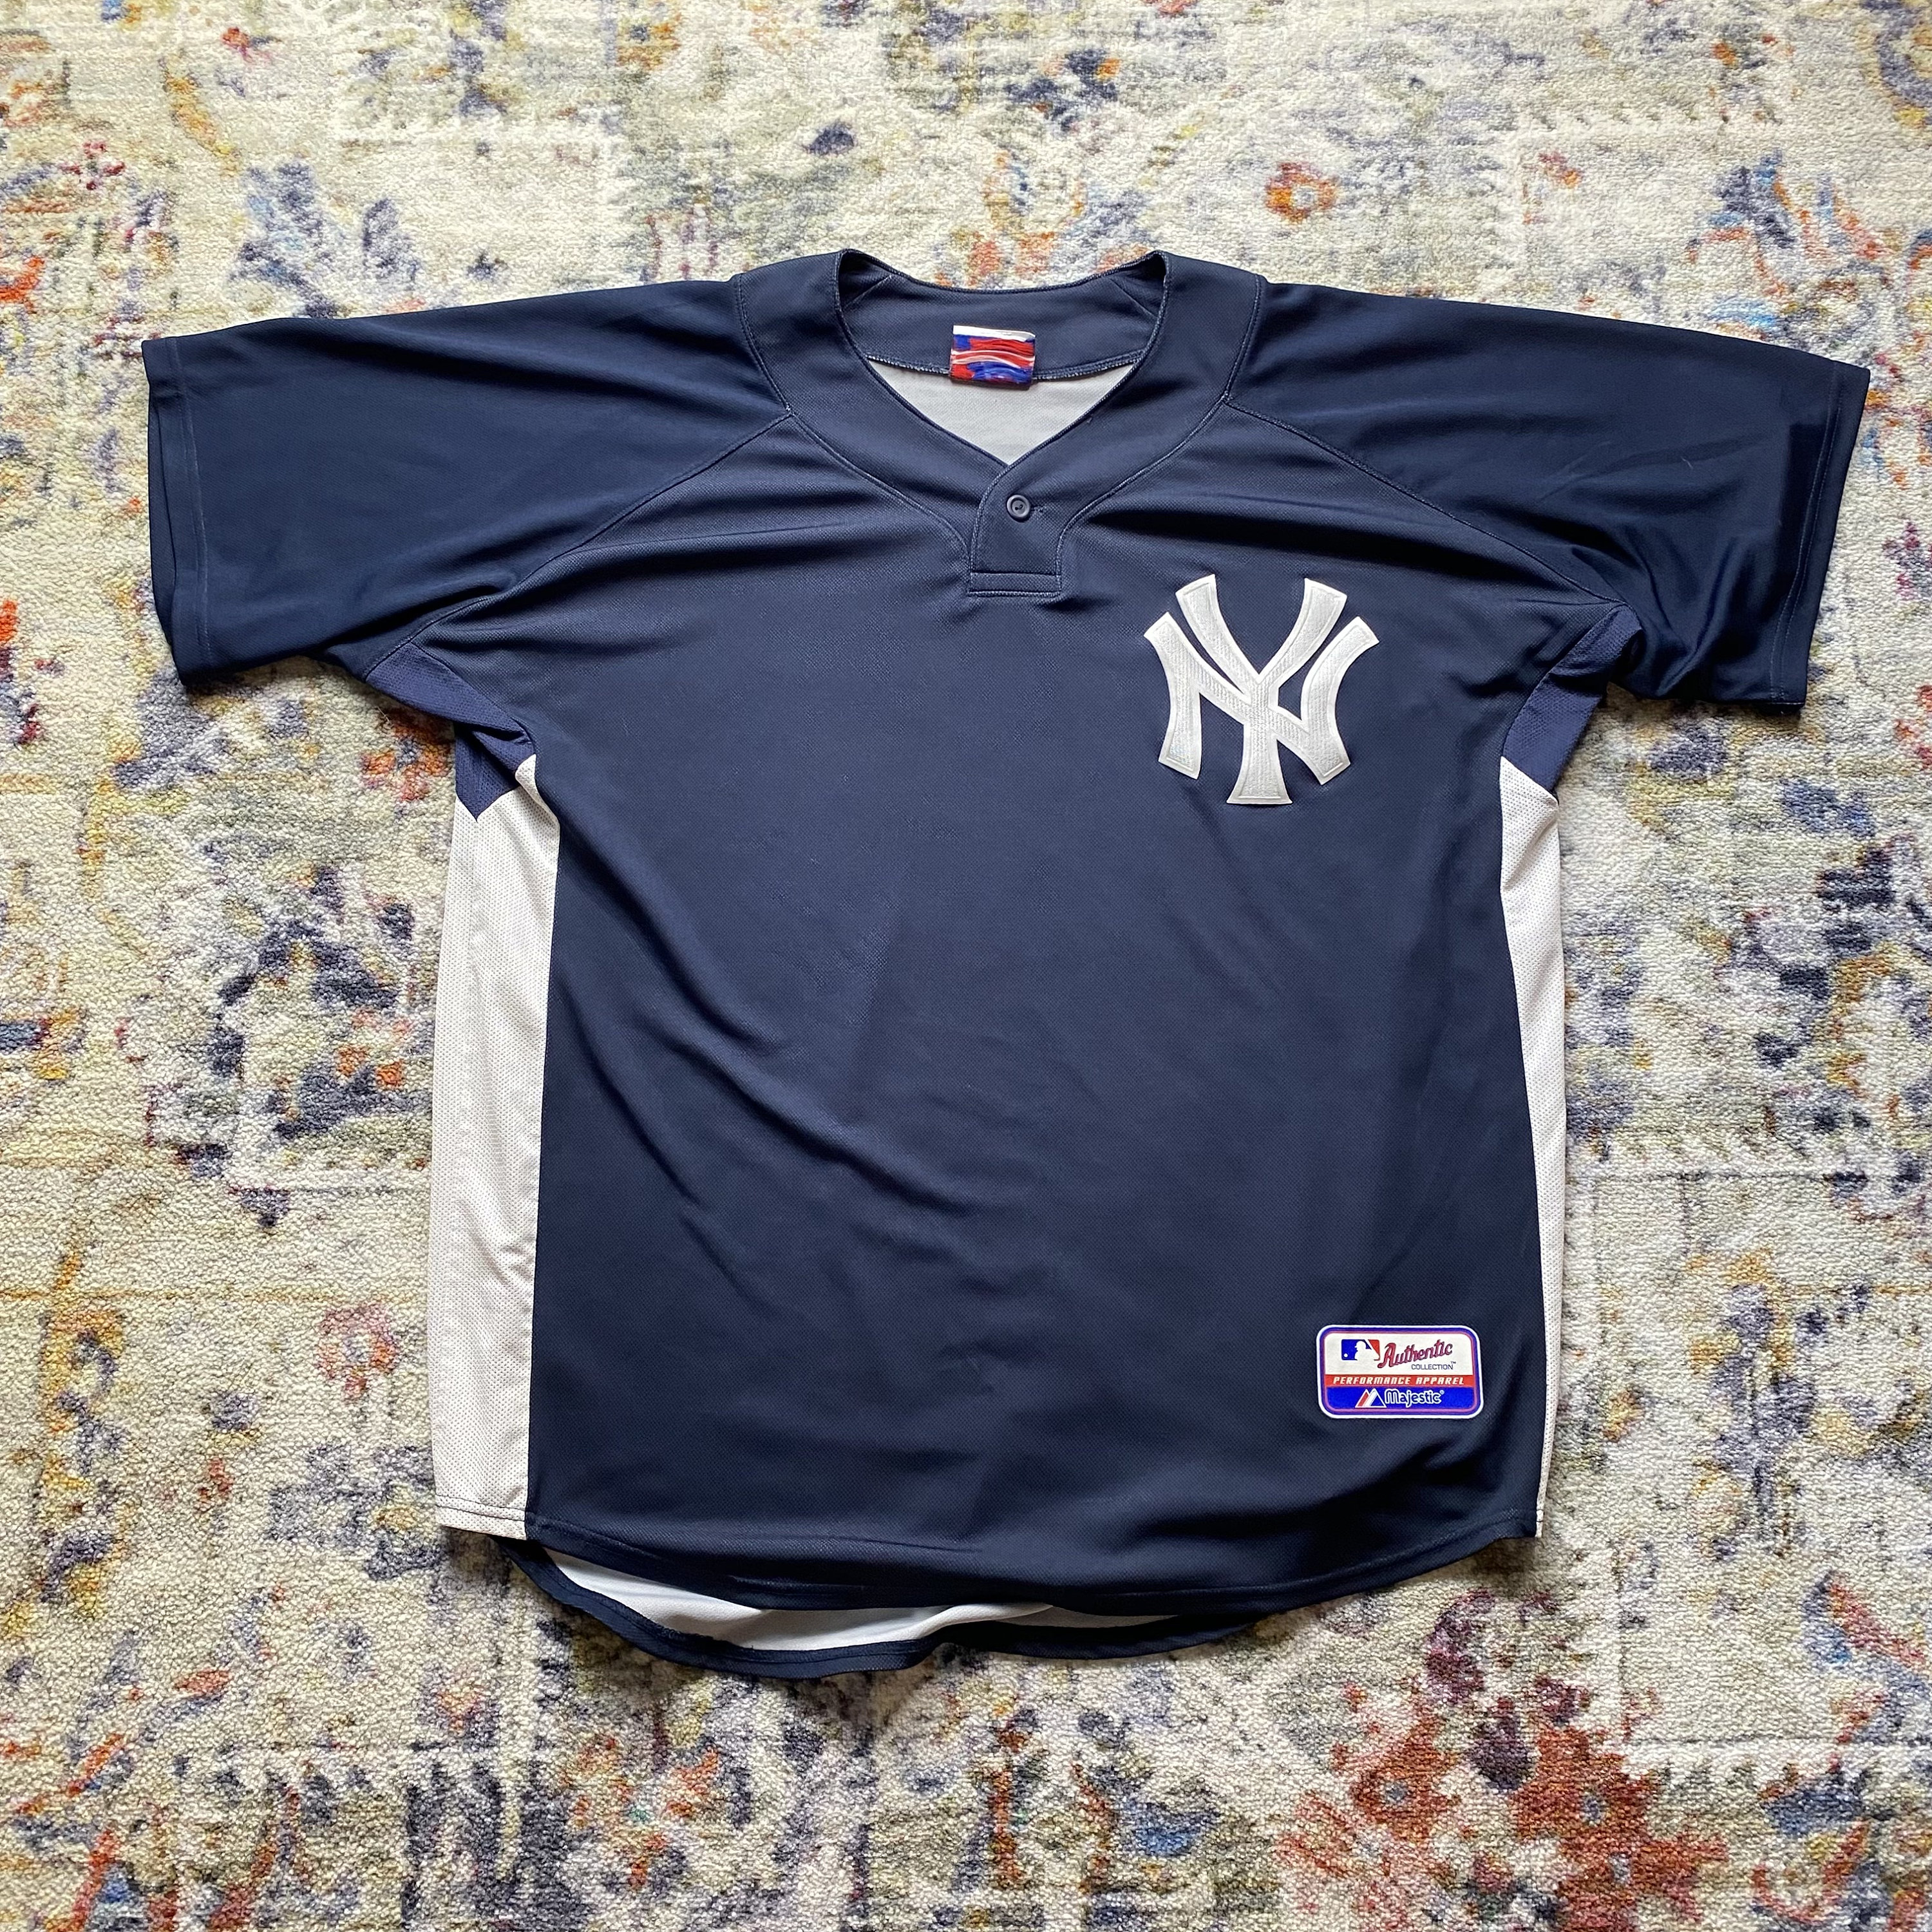 Mickey Mantle Yankees Nike Jerseys, Shirts and Souvenirs